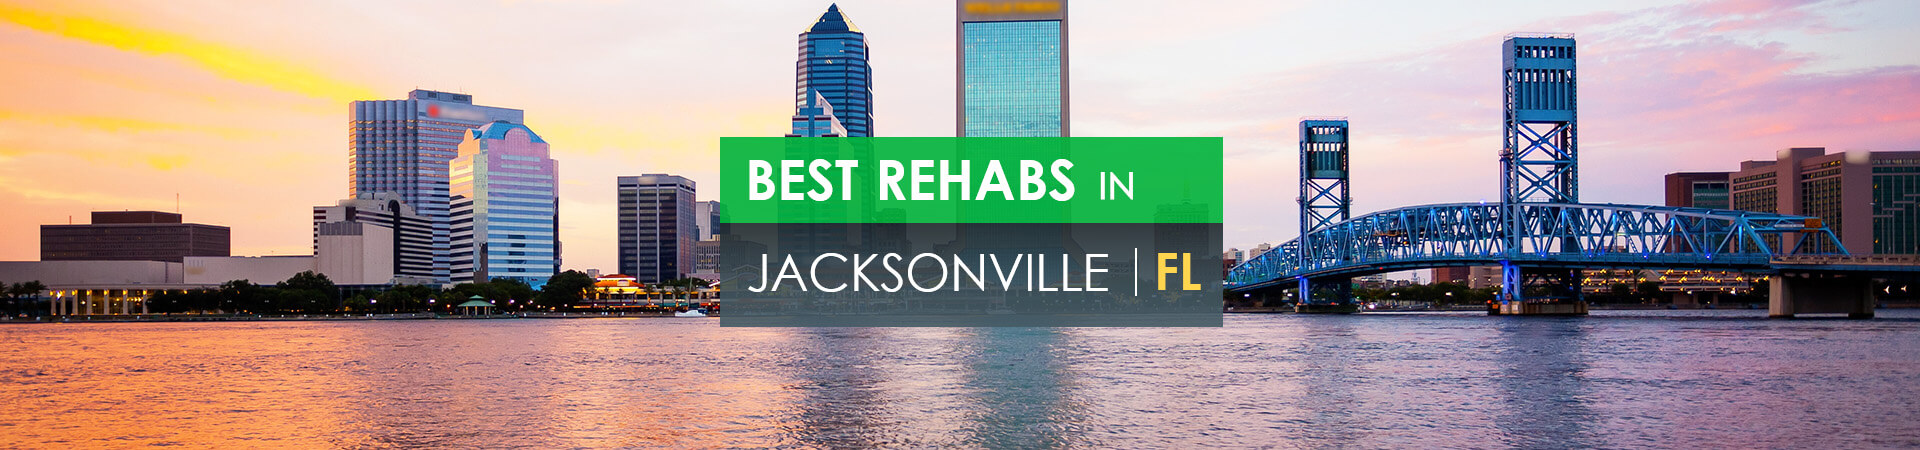 Best rehabs in Jacksonville, FL